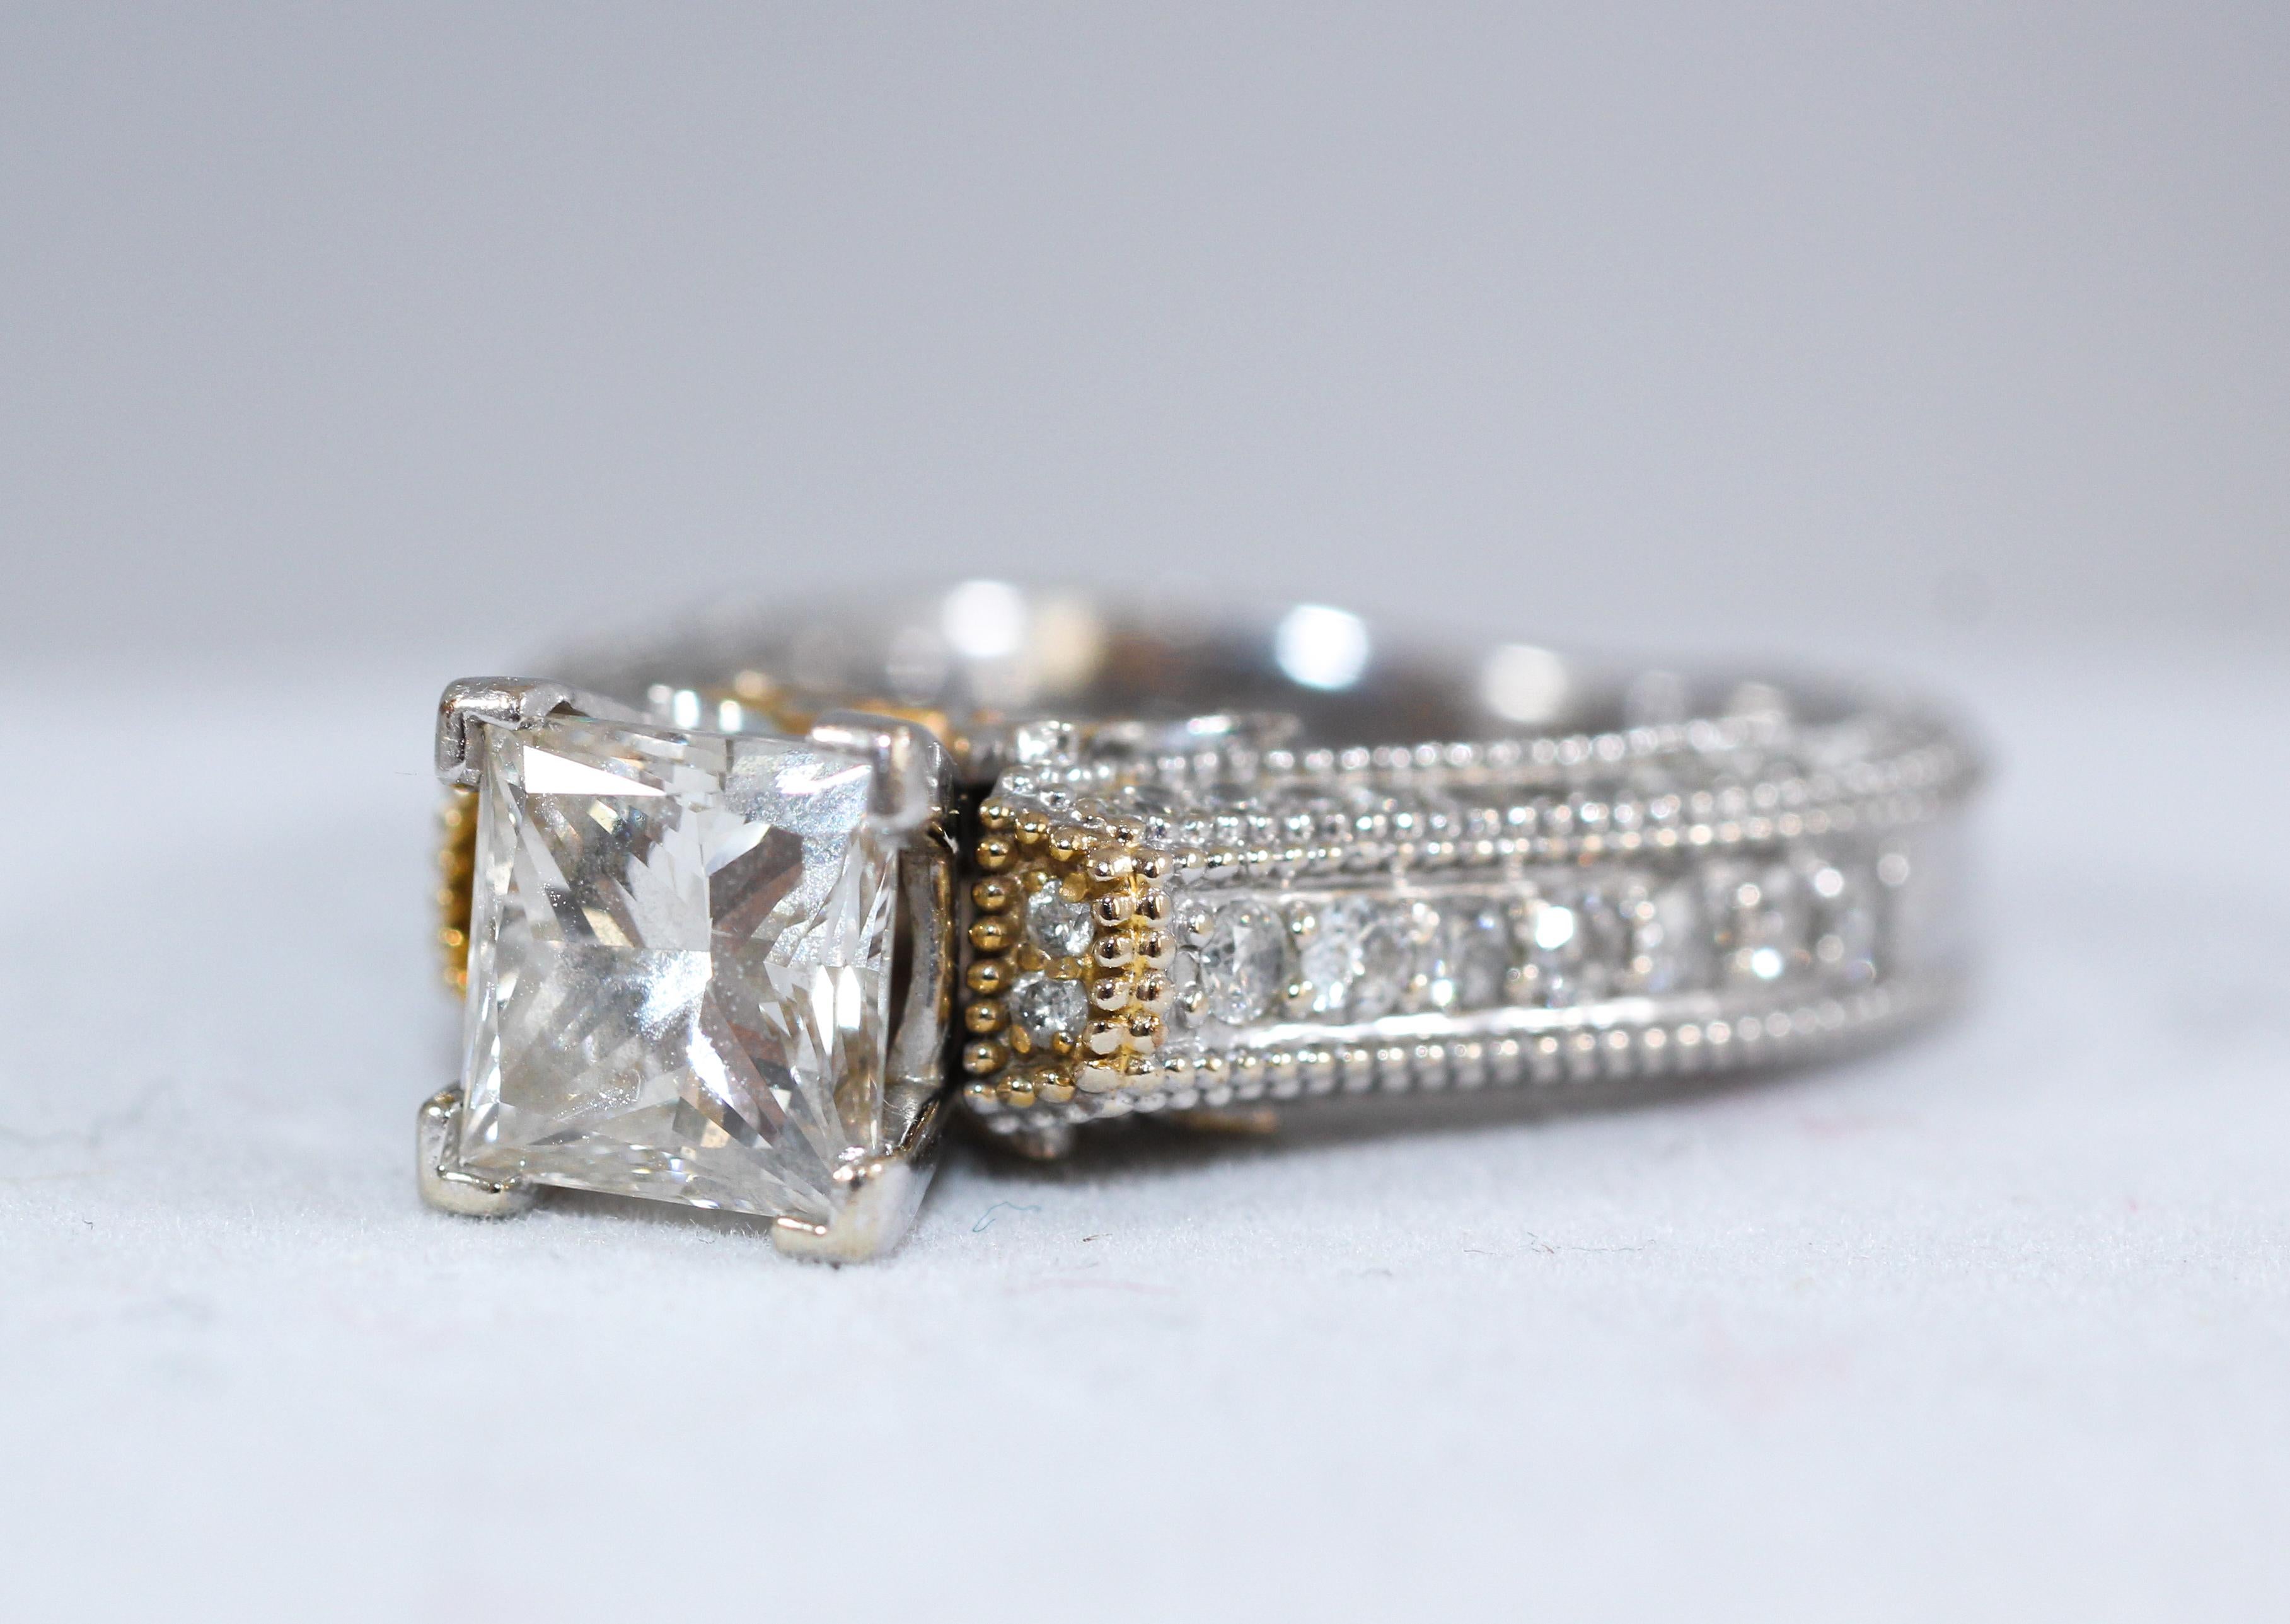 1.7 carat diamond ring